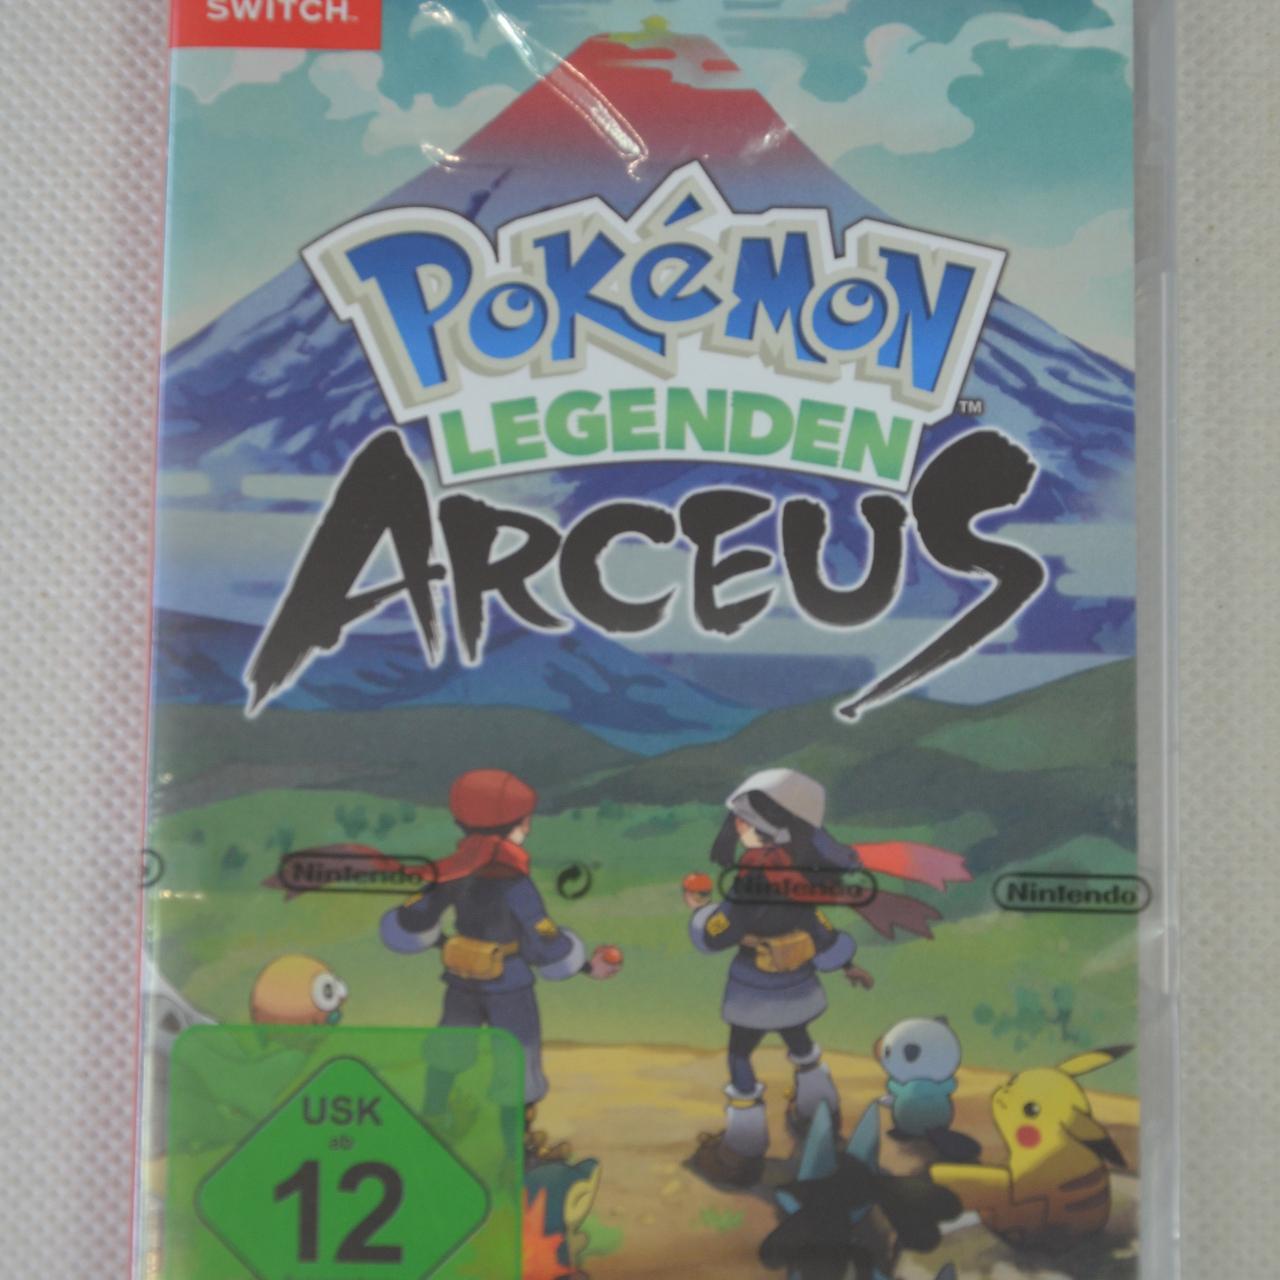 Legends: Pokemon Depop Arceus - Switch) (Nintendo